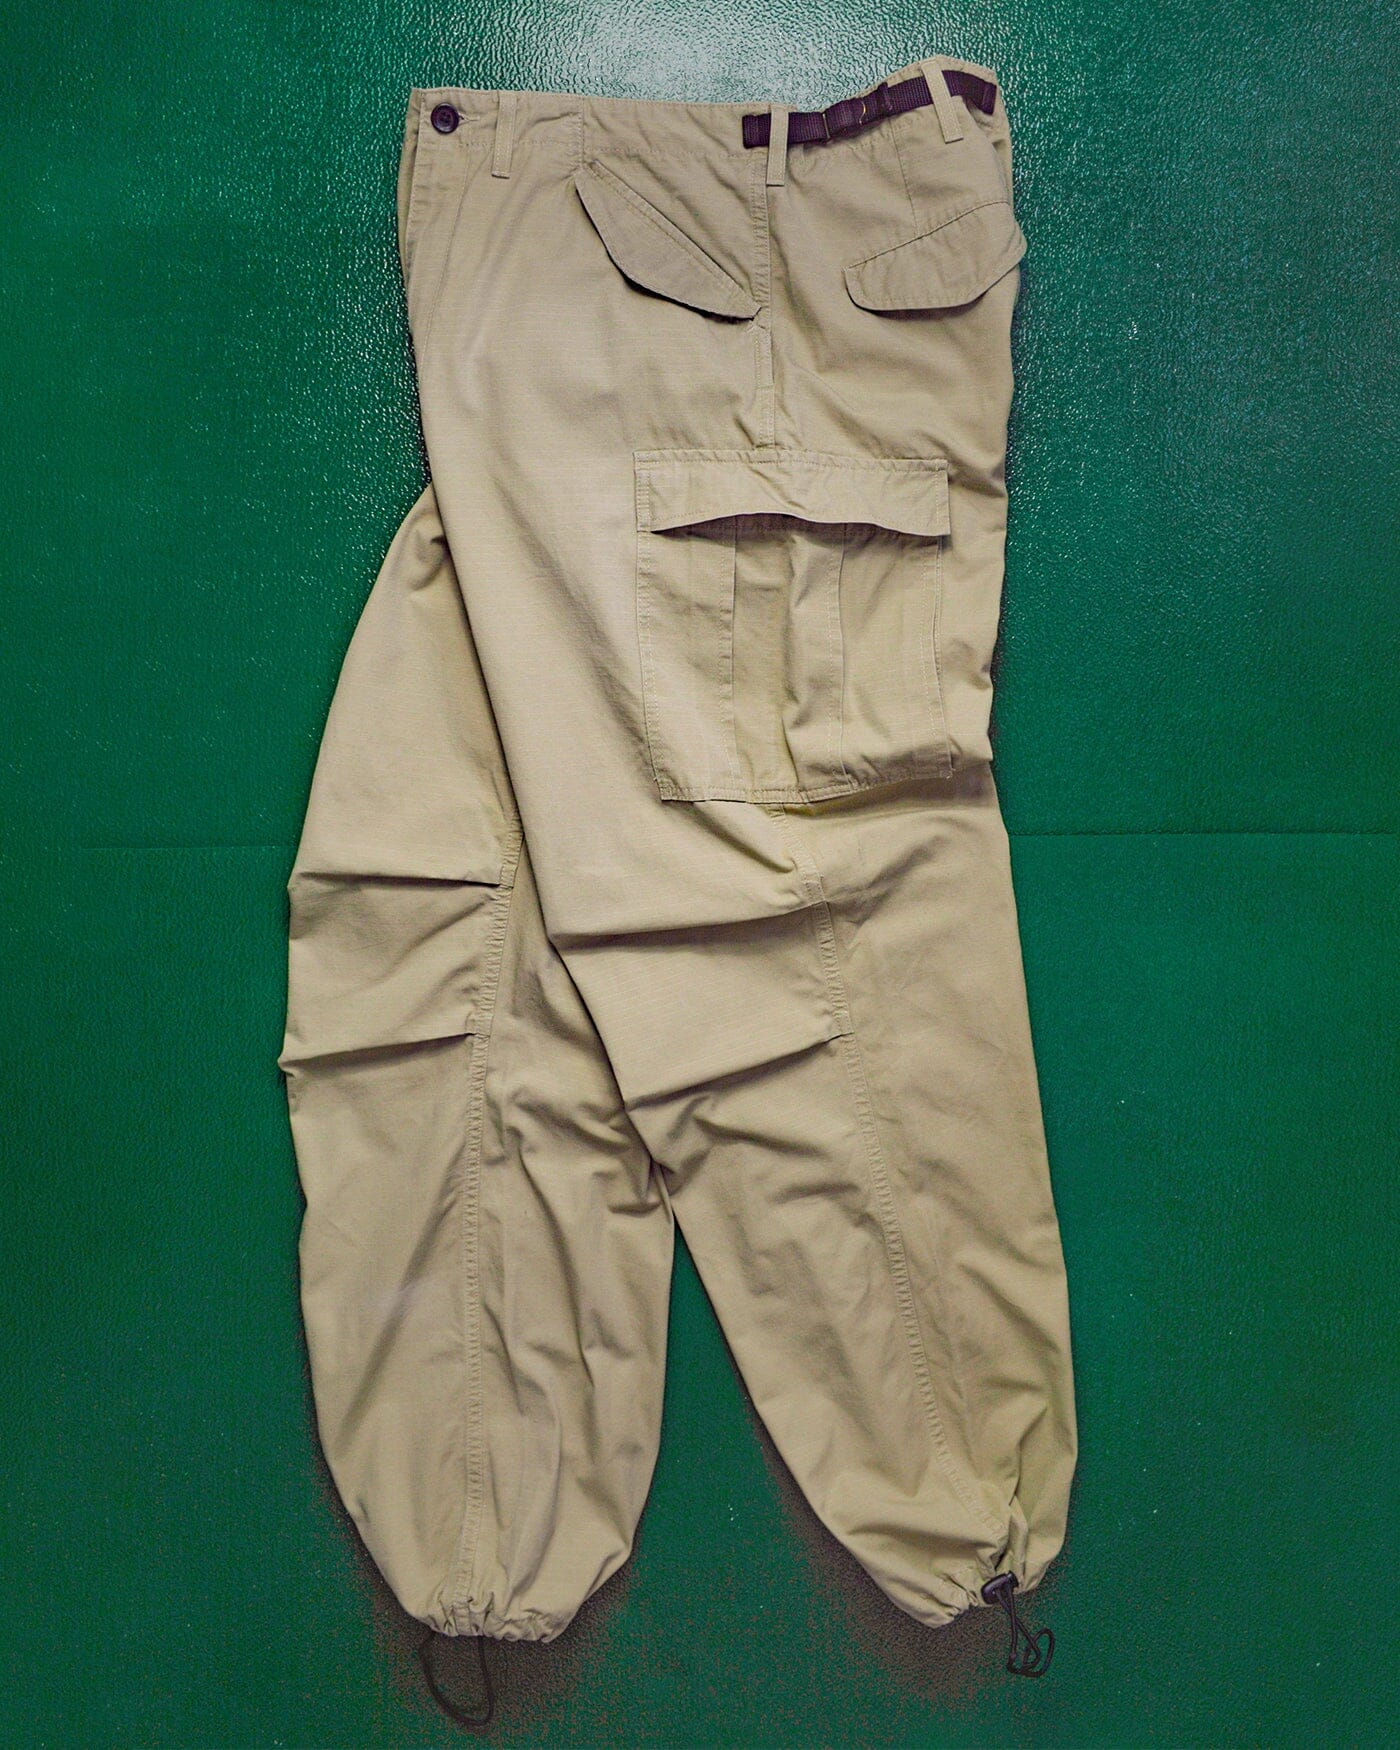 Convertible Cargo Pants - Grey | Levi's® US